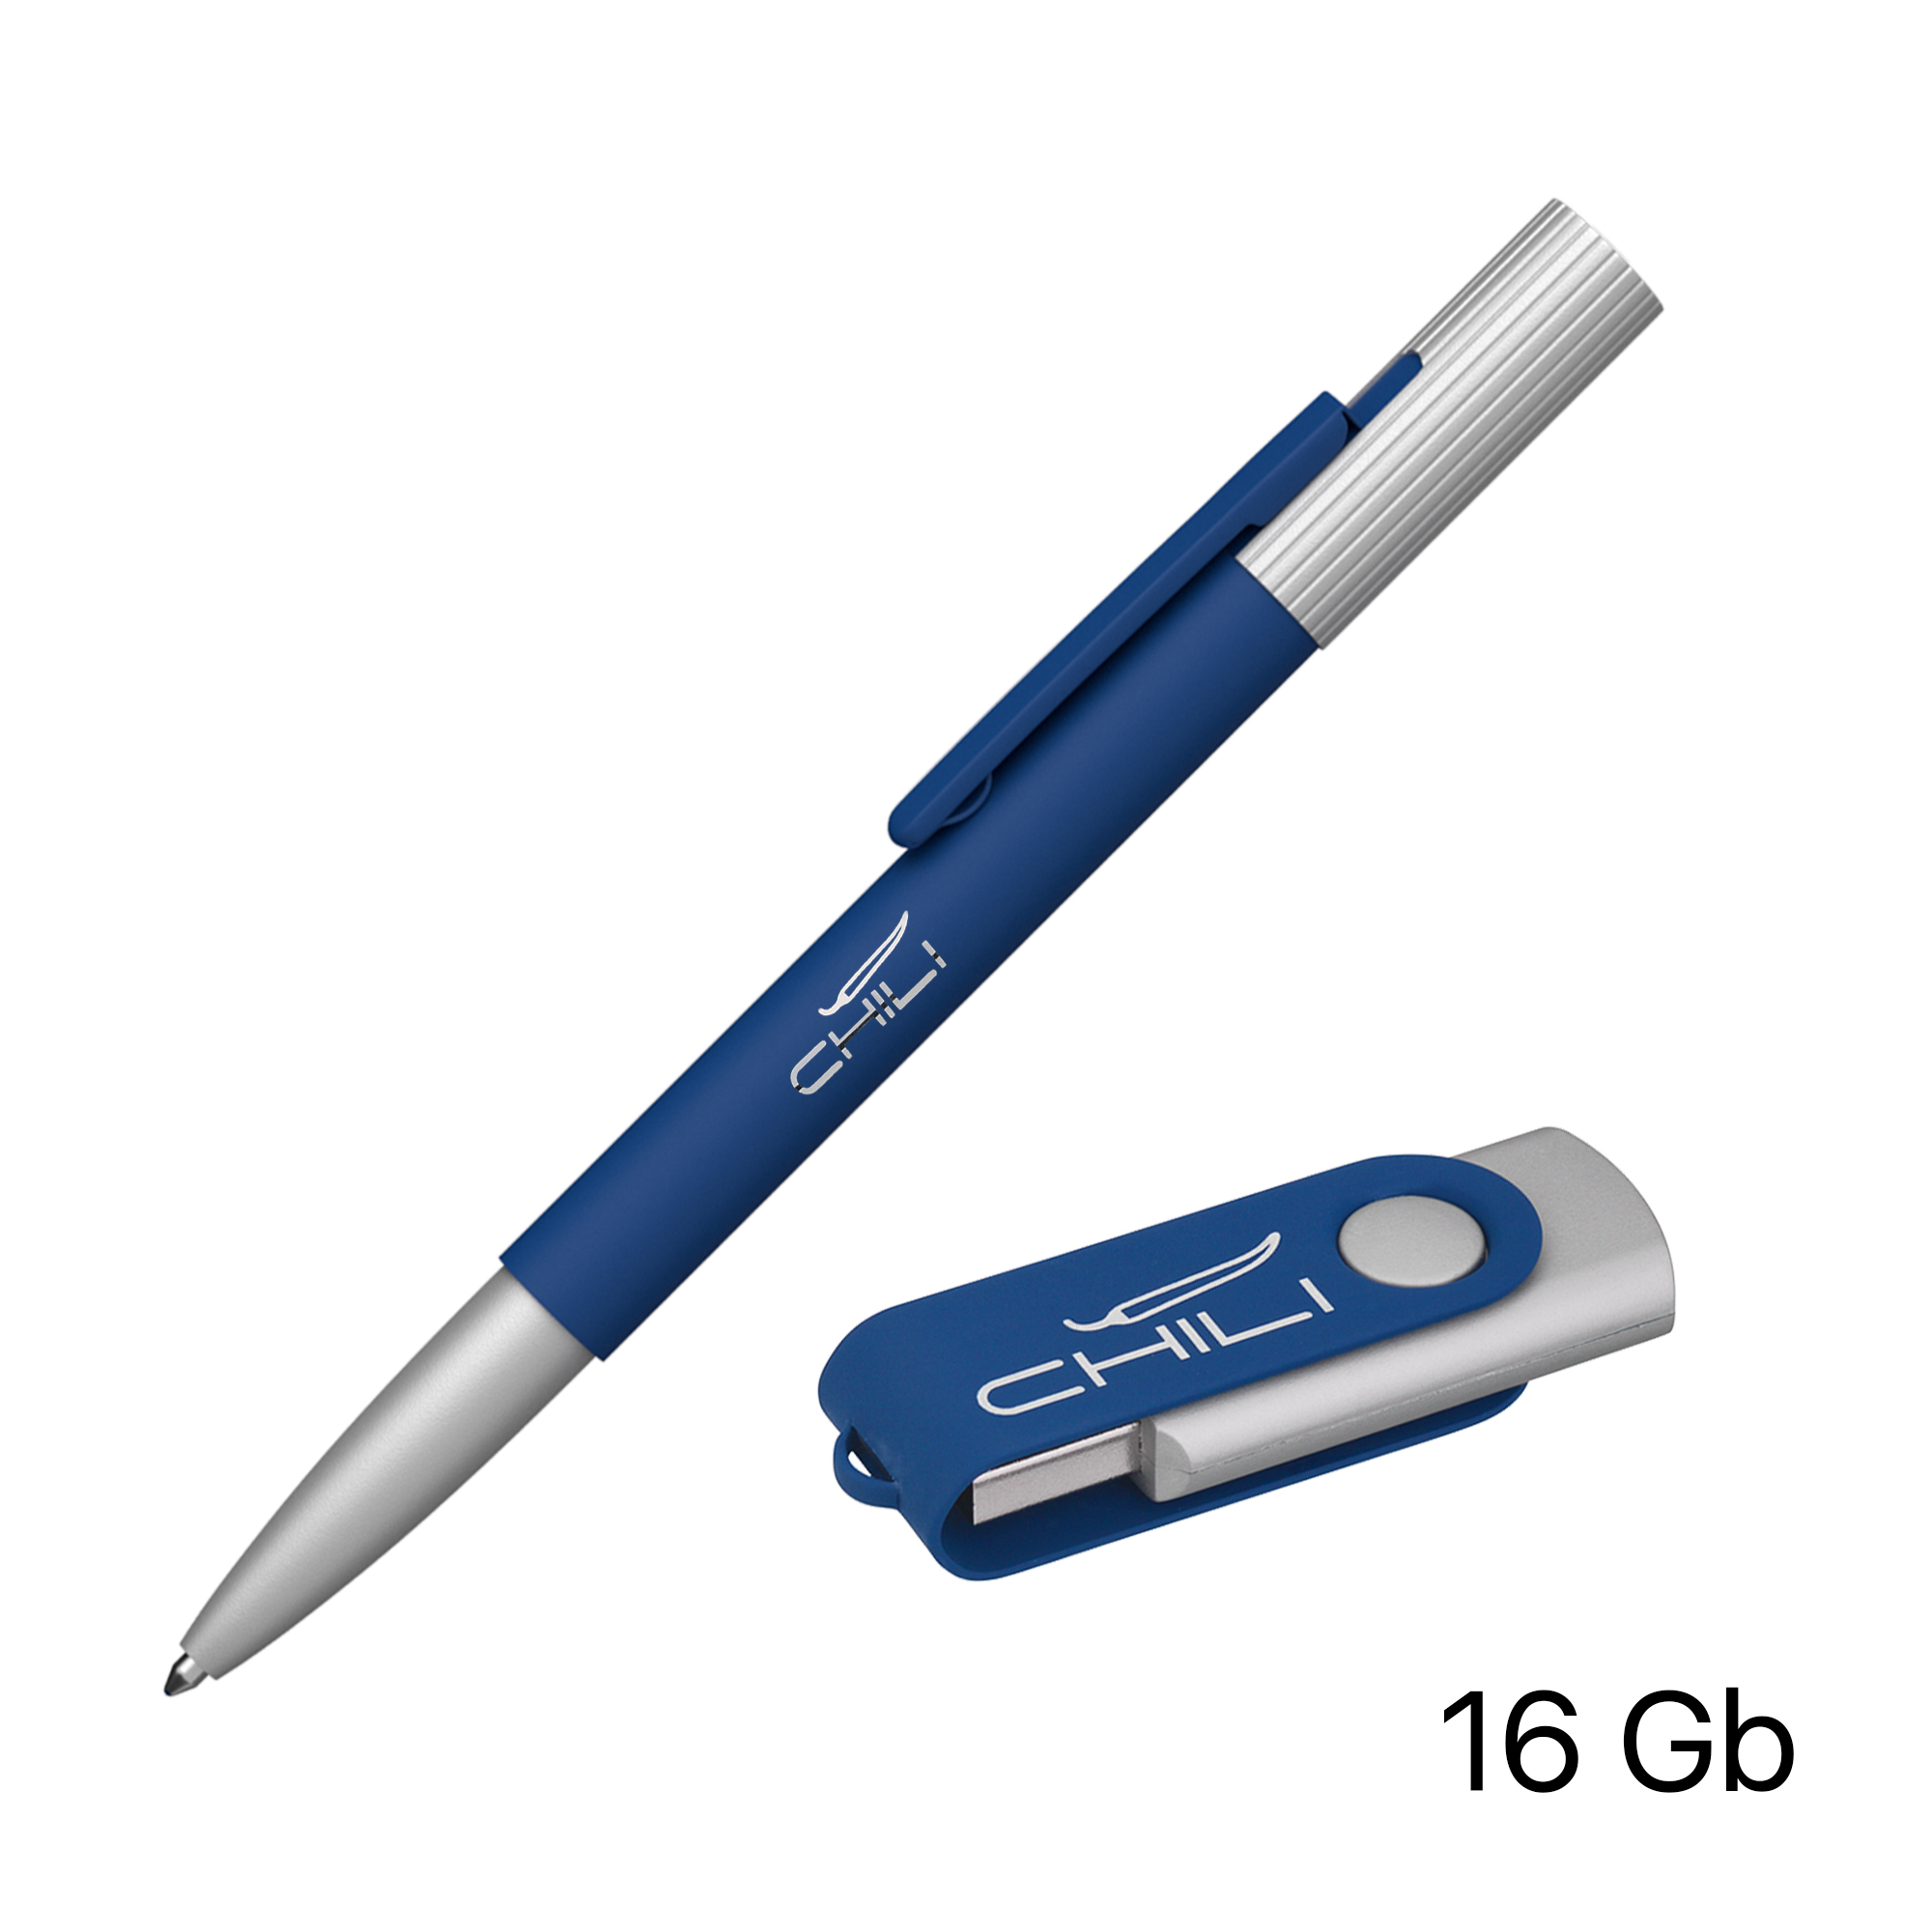 Набор ручка "Clas" + флеш-карта "Vostok" 16 Гб в футляре, покрытие soft touch